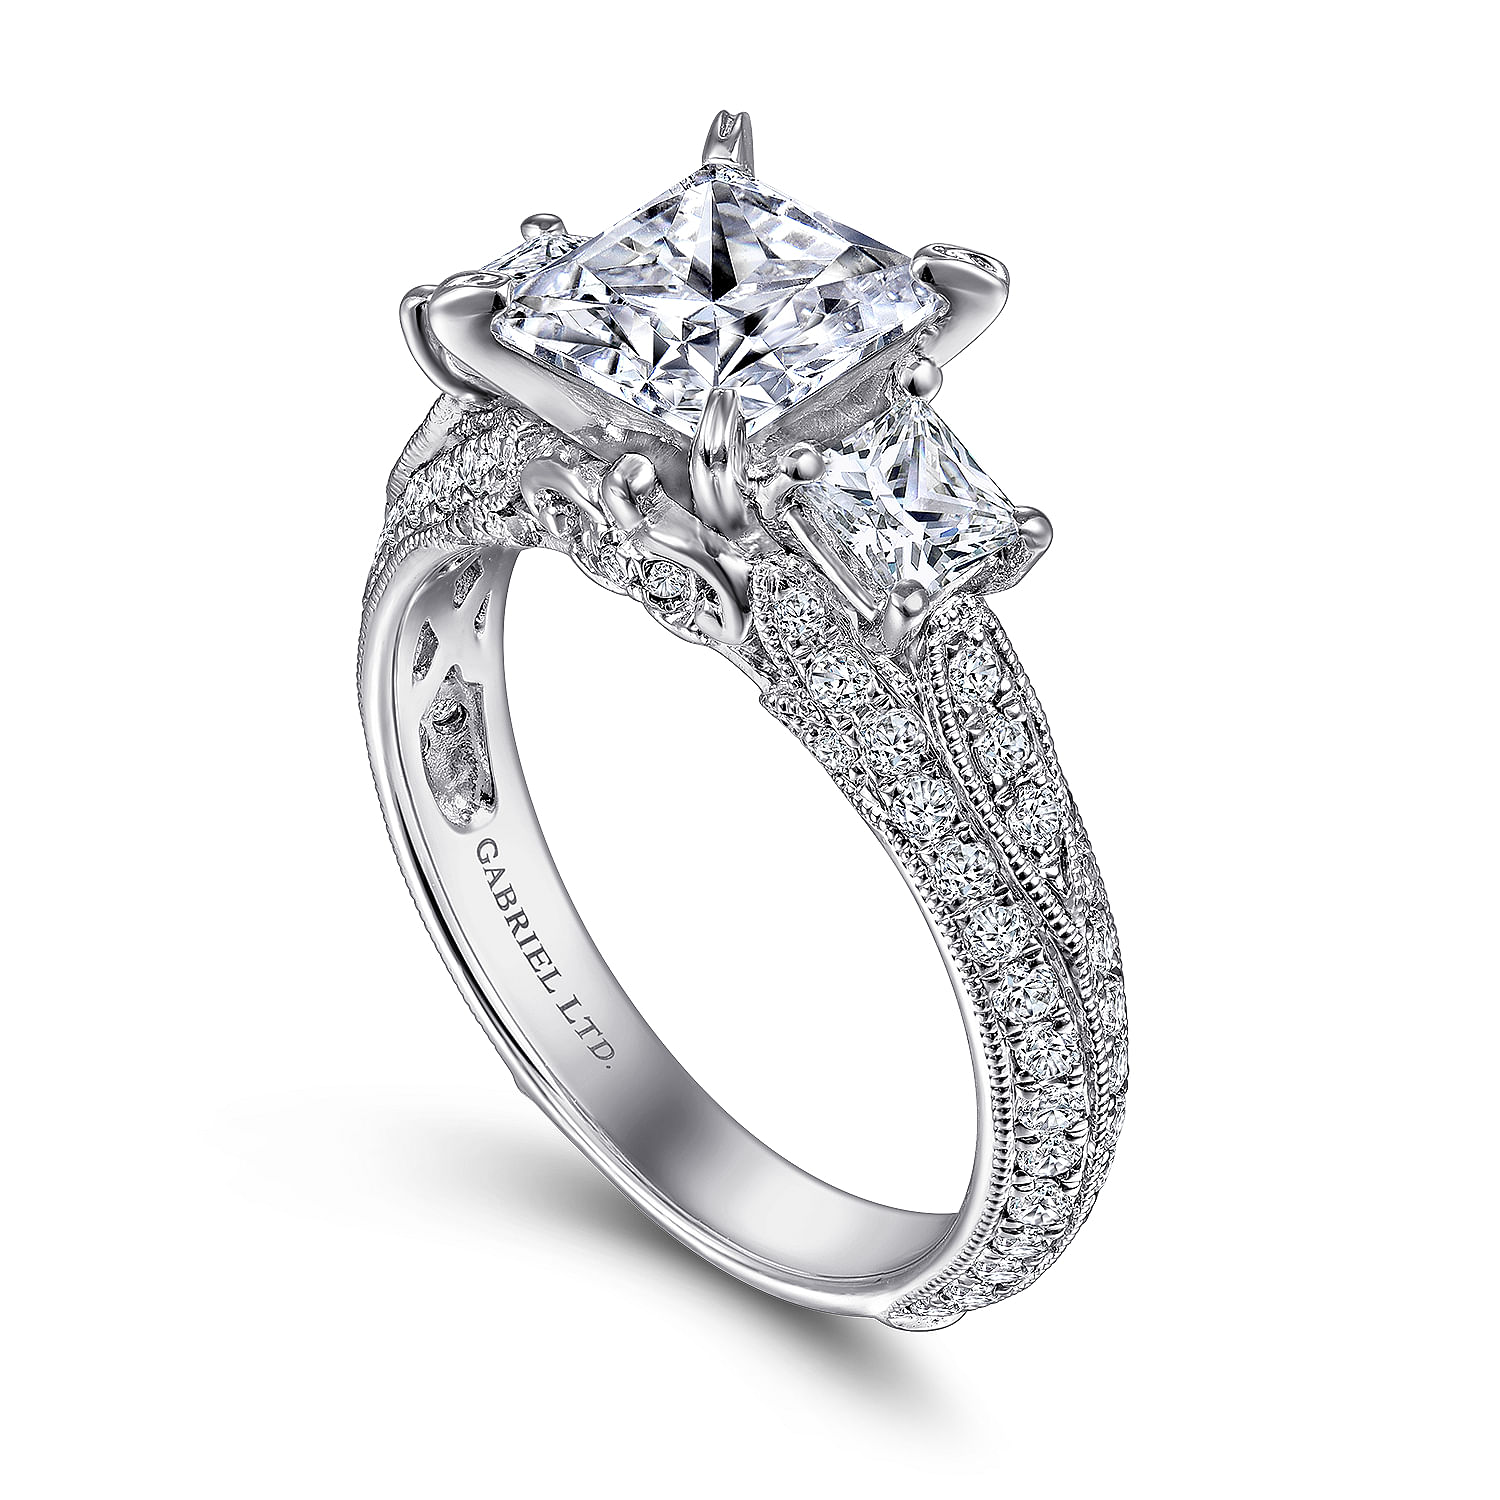 Vintage Inspired 18K White Gold Princess Cut Three Stone Diamond Engagement Ring